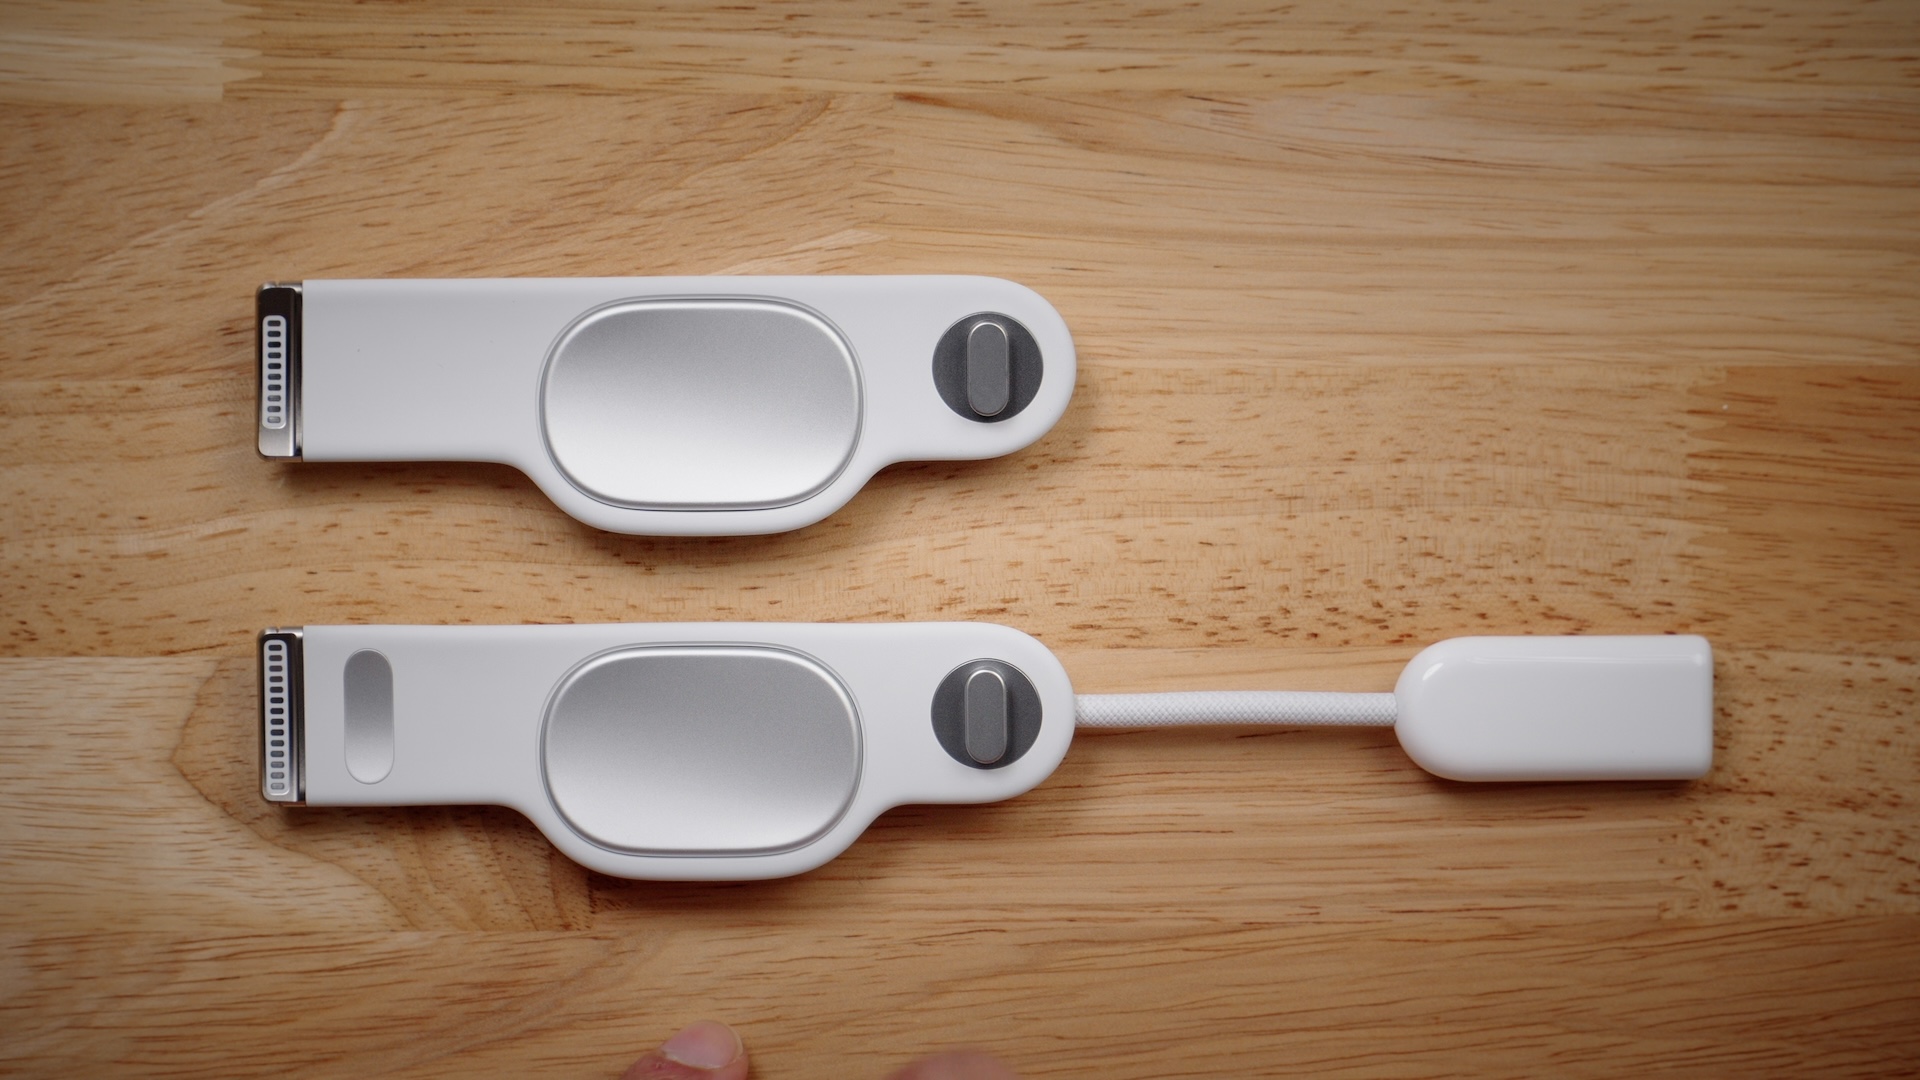 Apple Vision Pro Developer Strap compared to Audio Strap on table